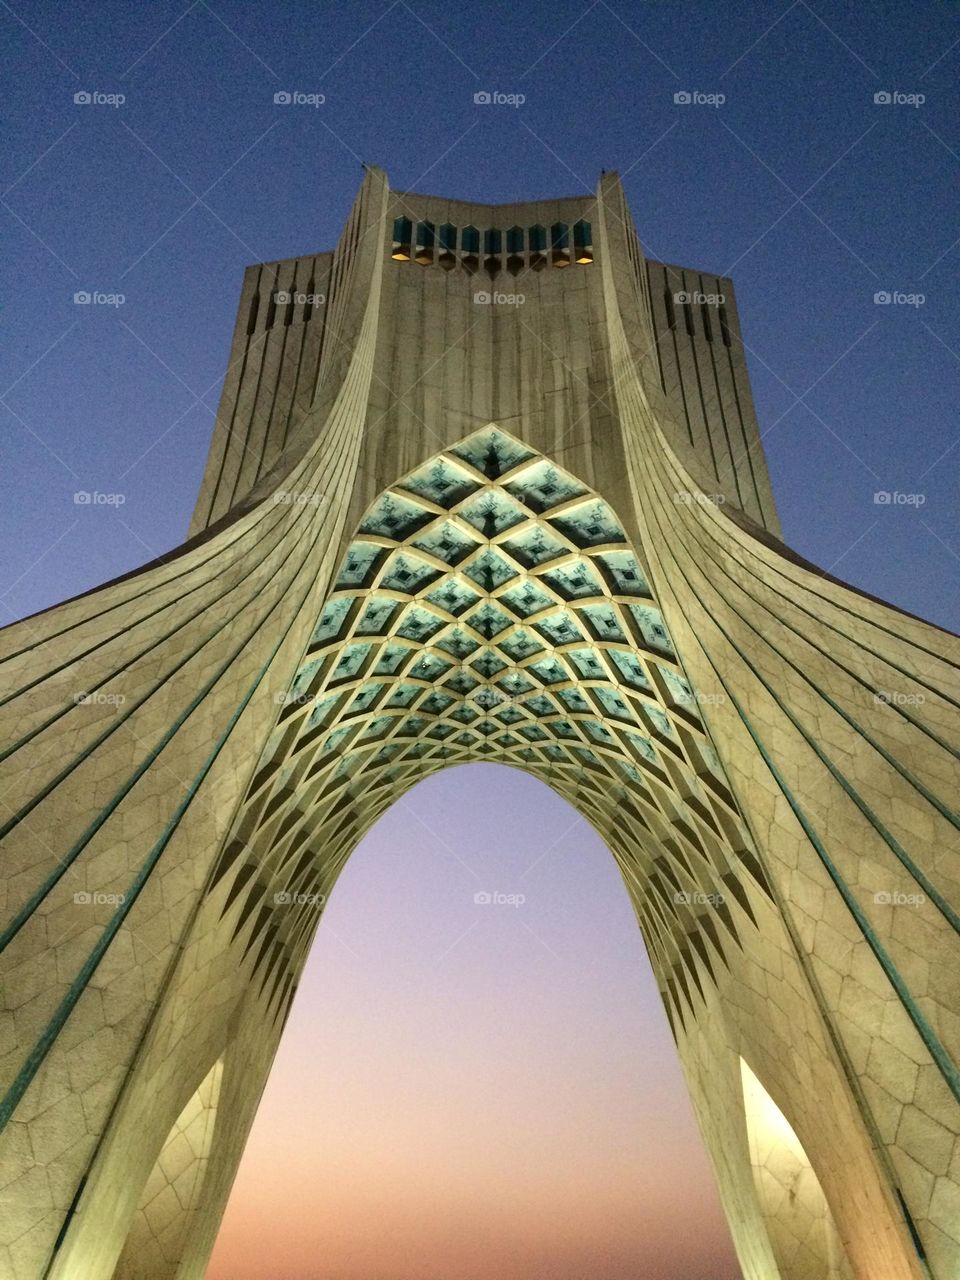 Azadi(freedom) Tower